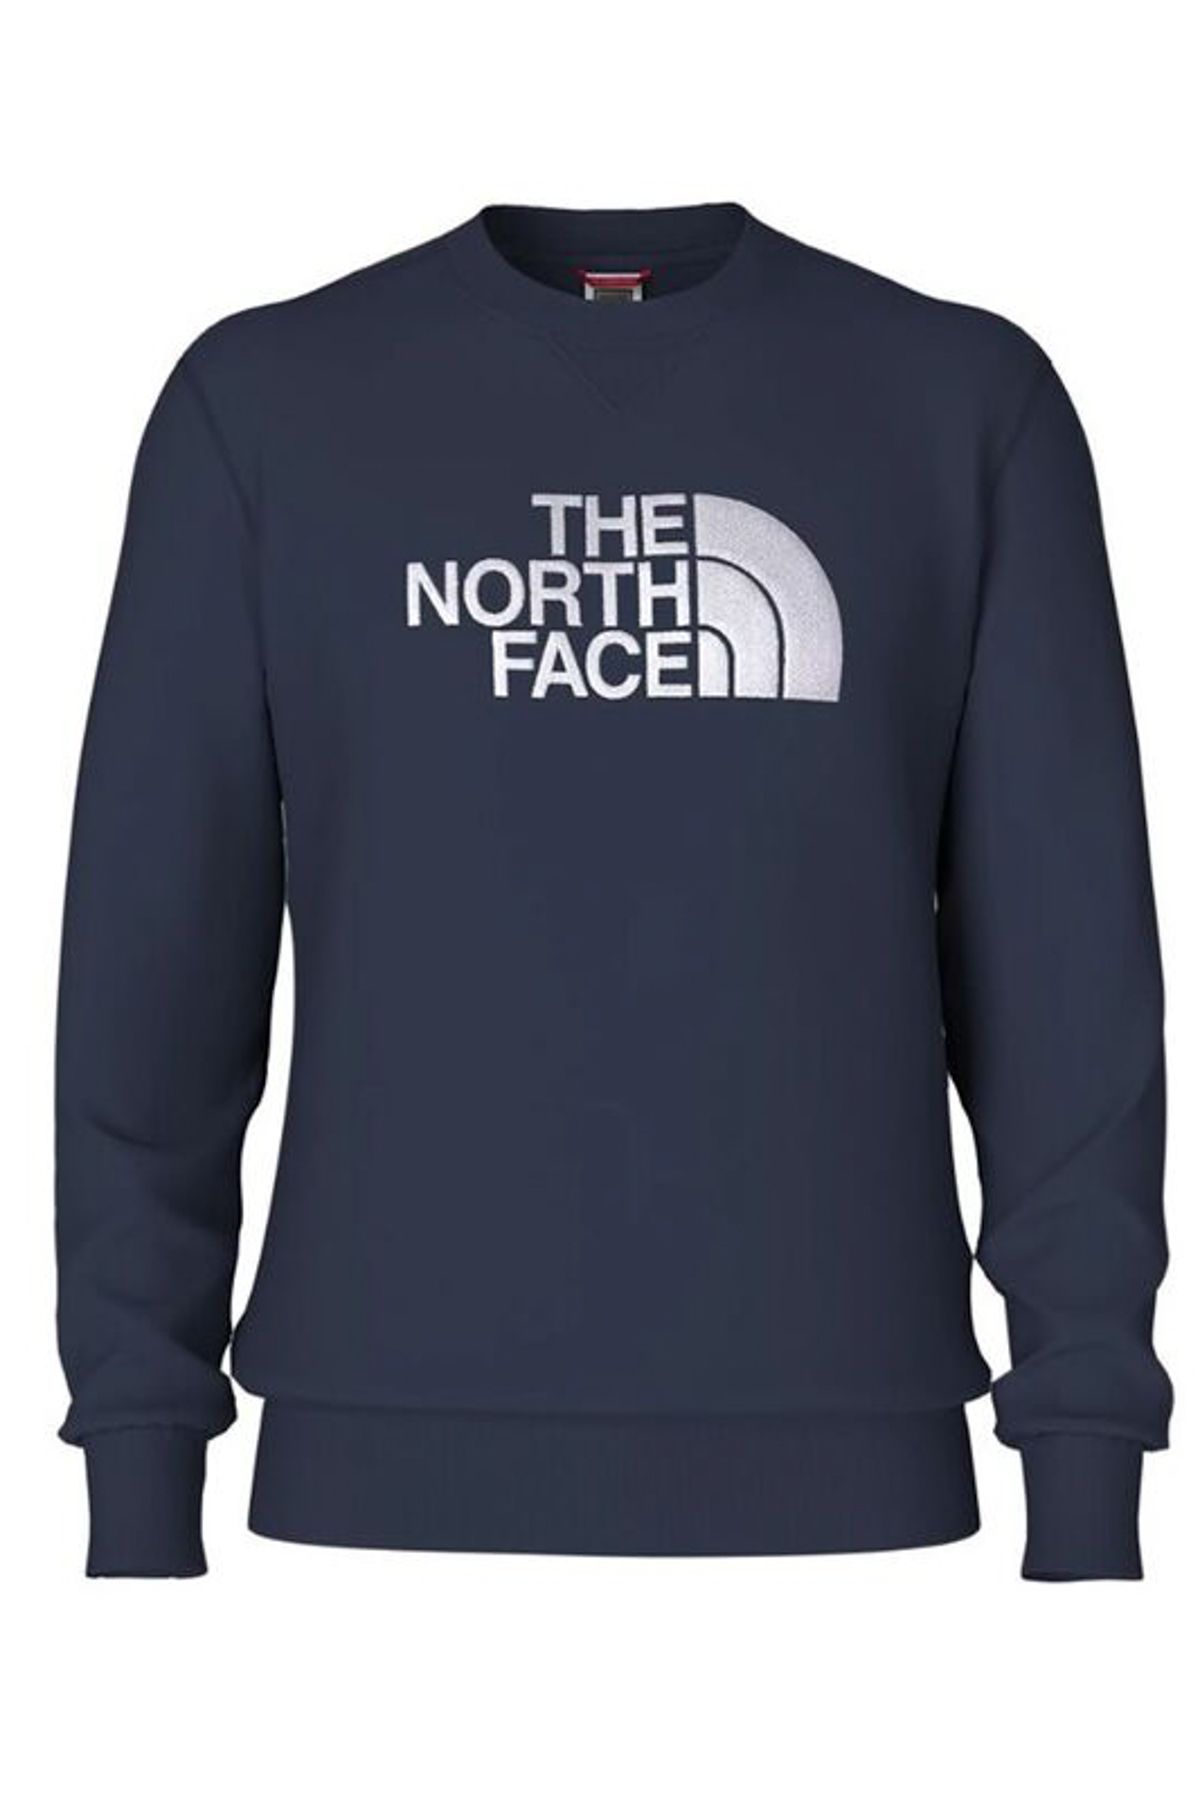 The North Face Erkek Yetişkin SUMMIT NAVY